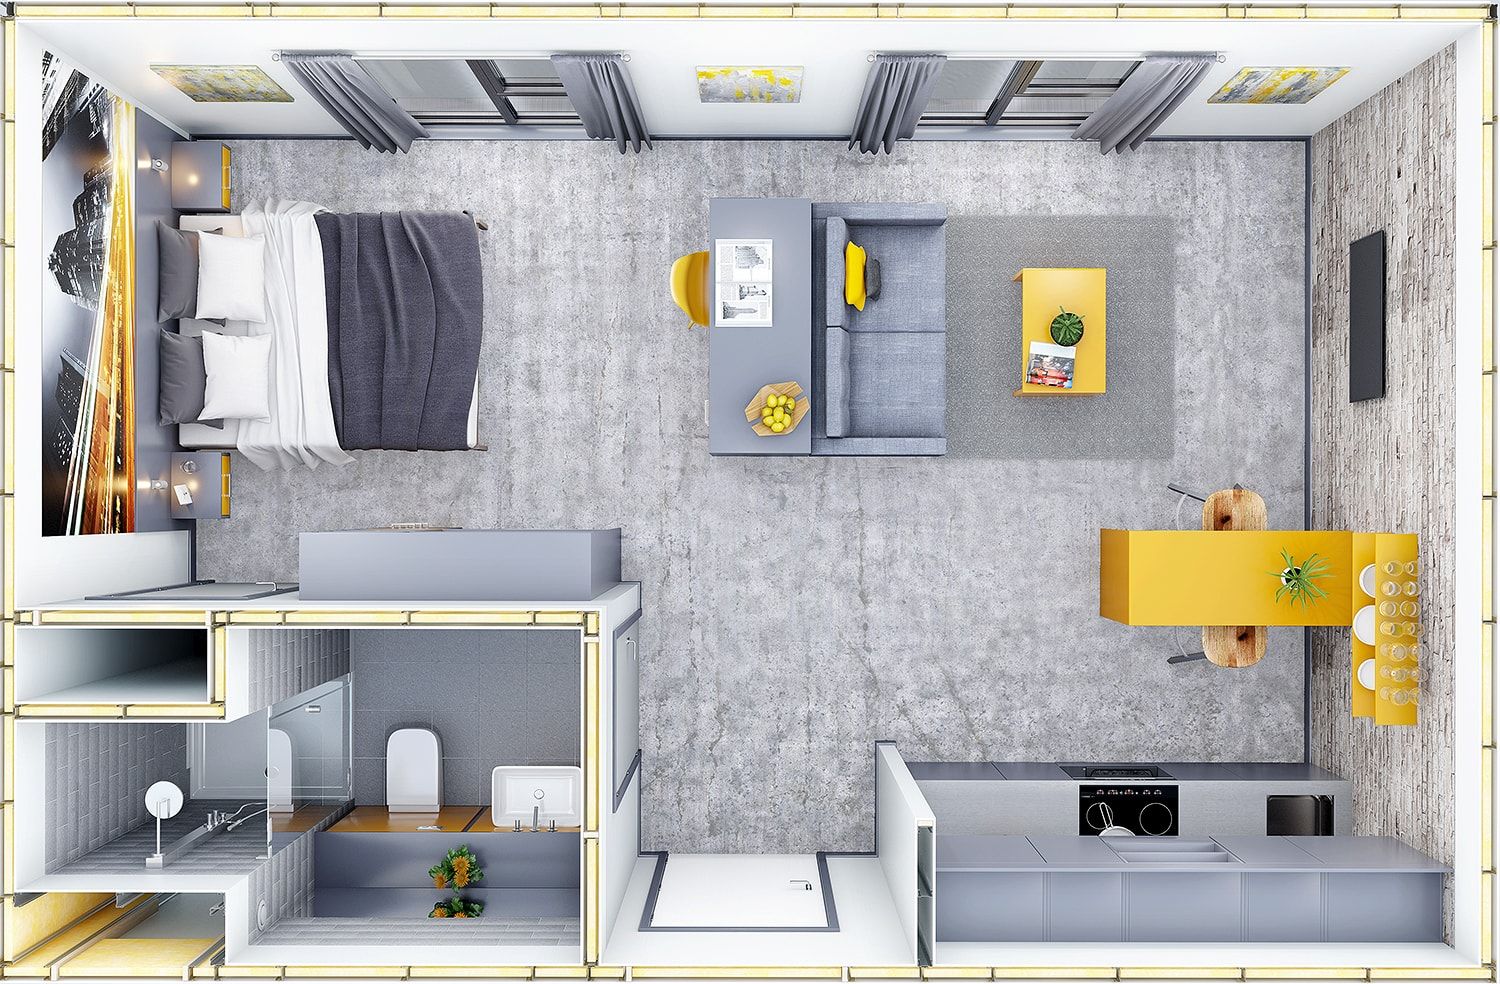 Plan view of studio Apartment CRISP3D Modern Bedroom Bricks internalCGI,visualisation,CGI,3dvisualisation,studio